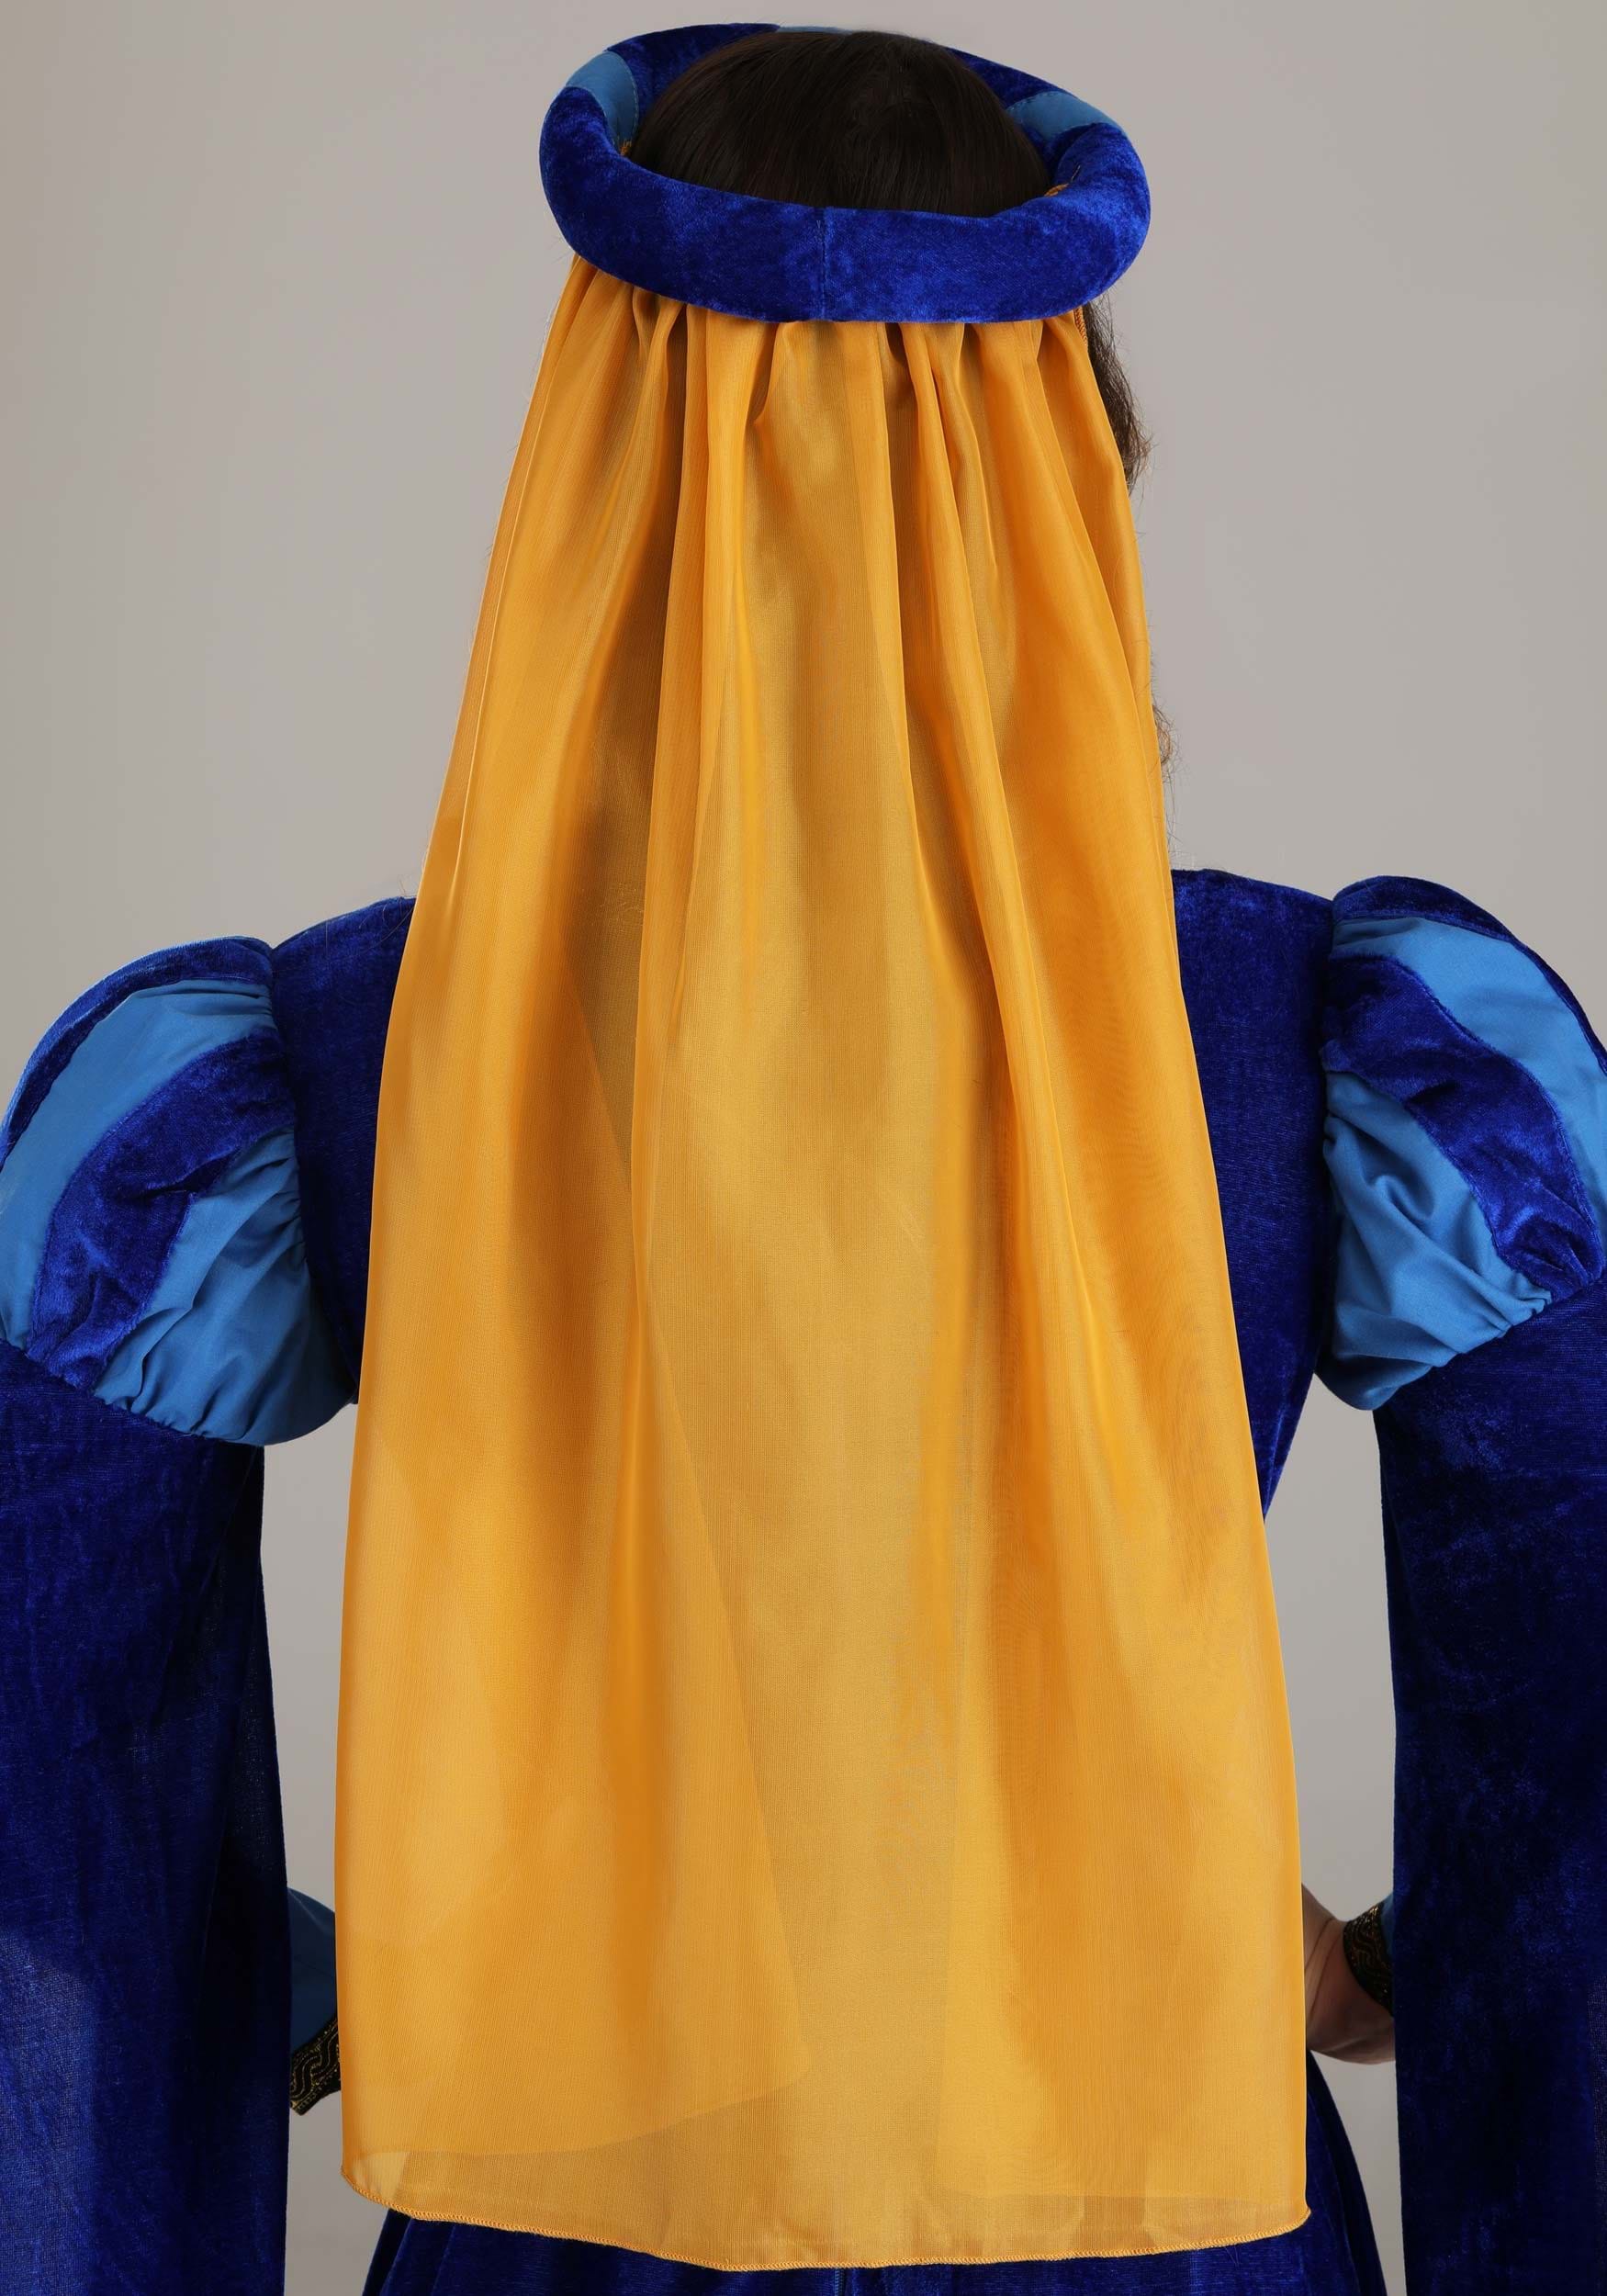 Women's Blue Renaissance Queen Halloween Costume